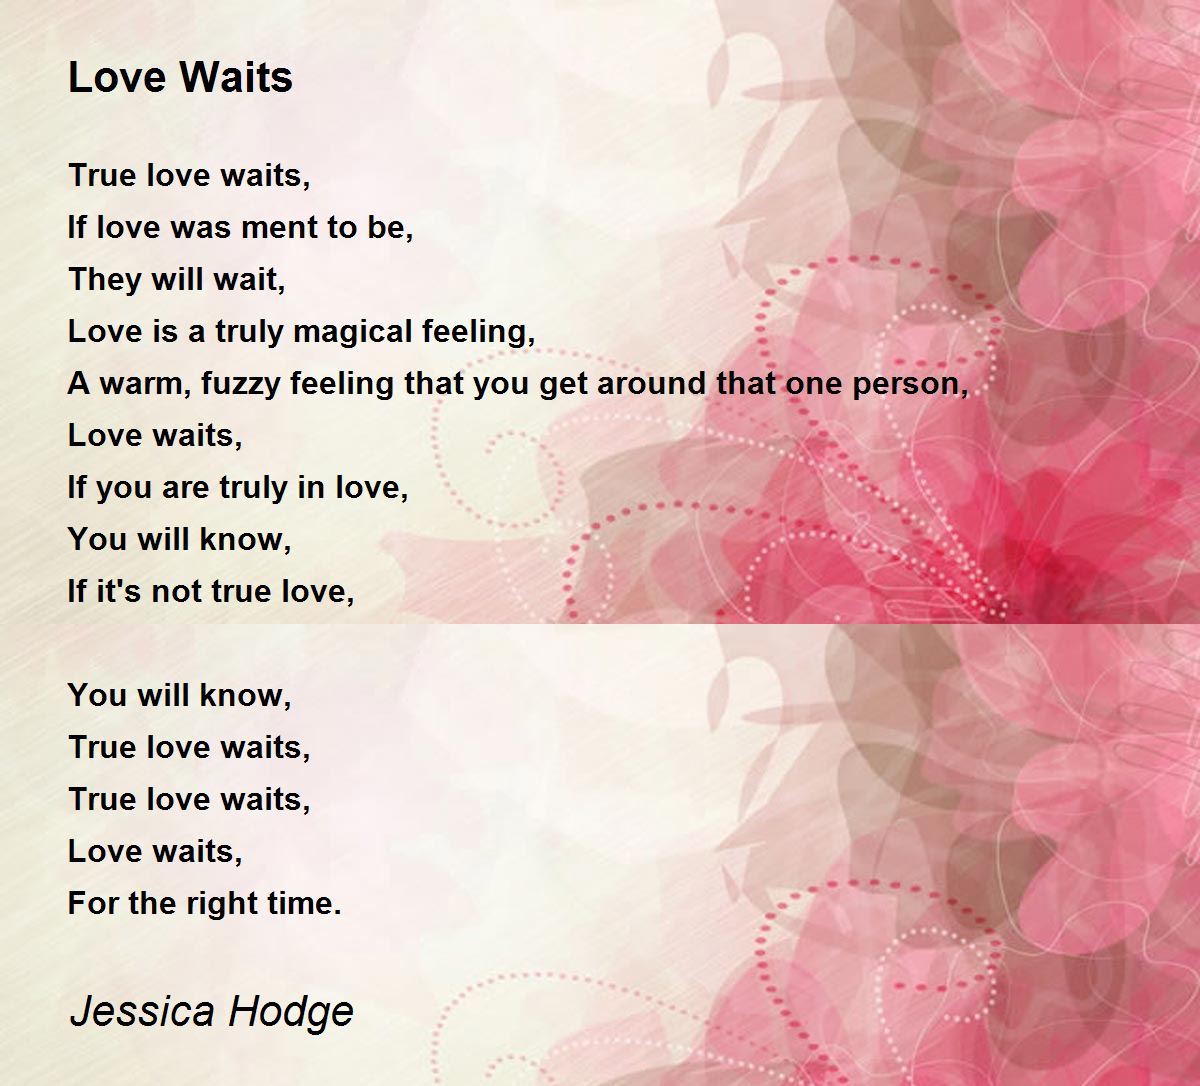 Love Waits - Love Waits Poem by Jessica Hodge